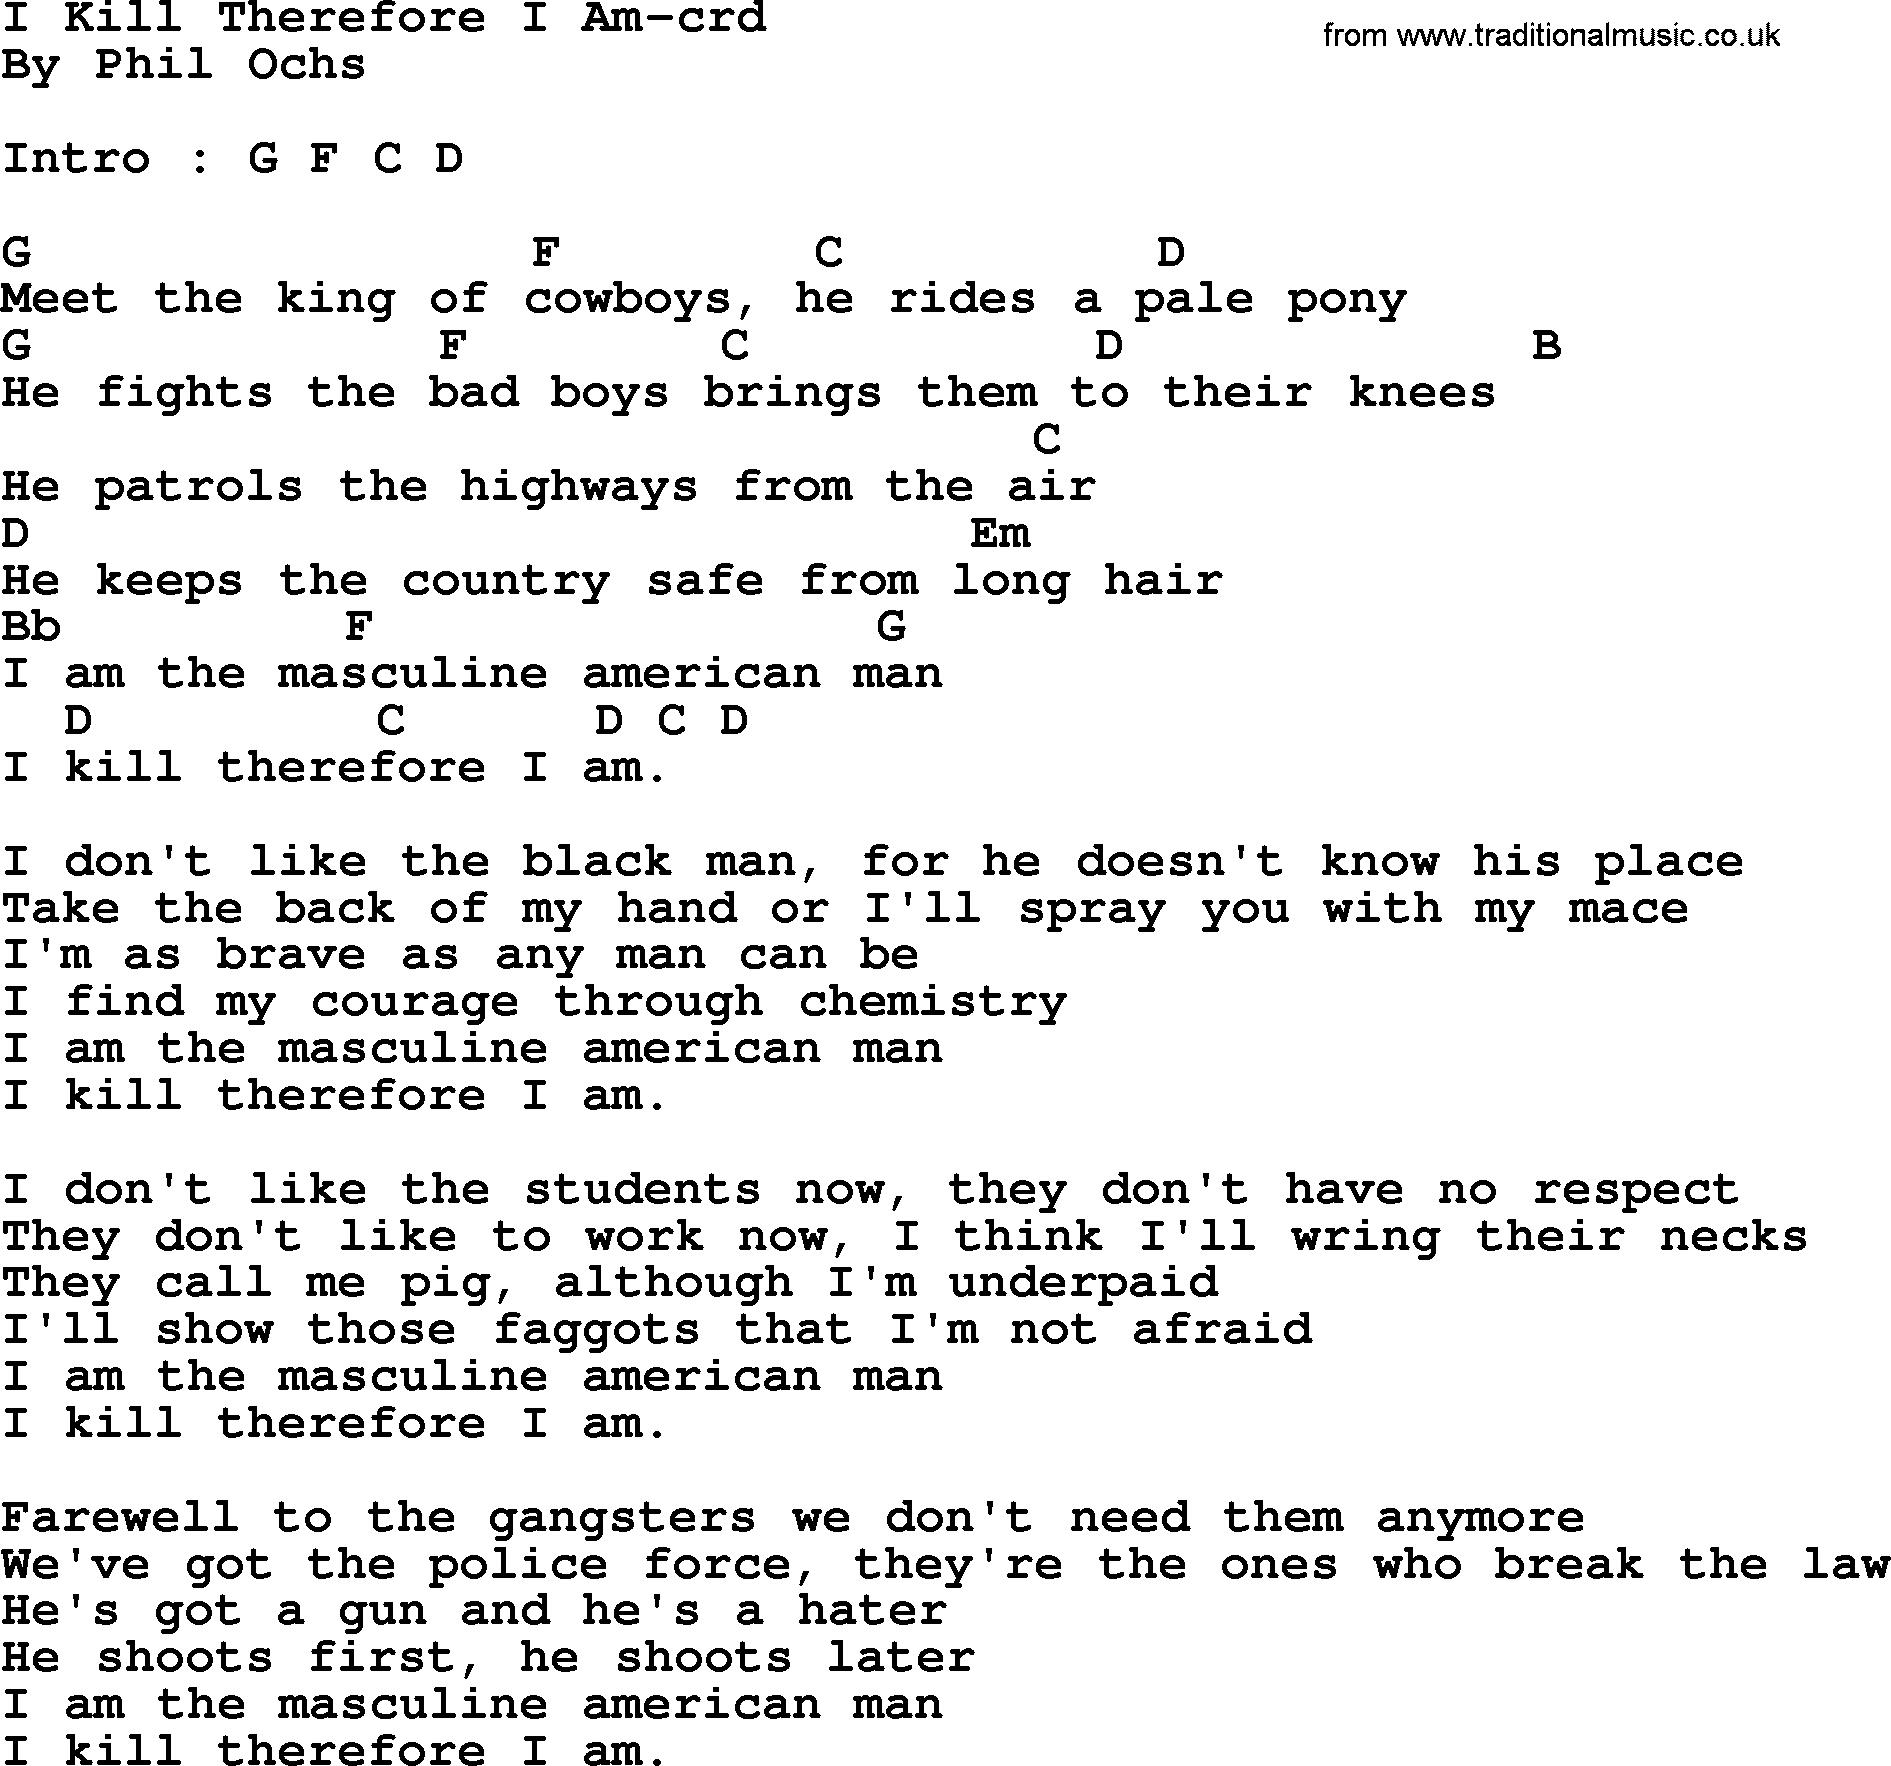 Phil Ochs song I Kill Therefore I Am- by Phil Ochs, lyrics and chords